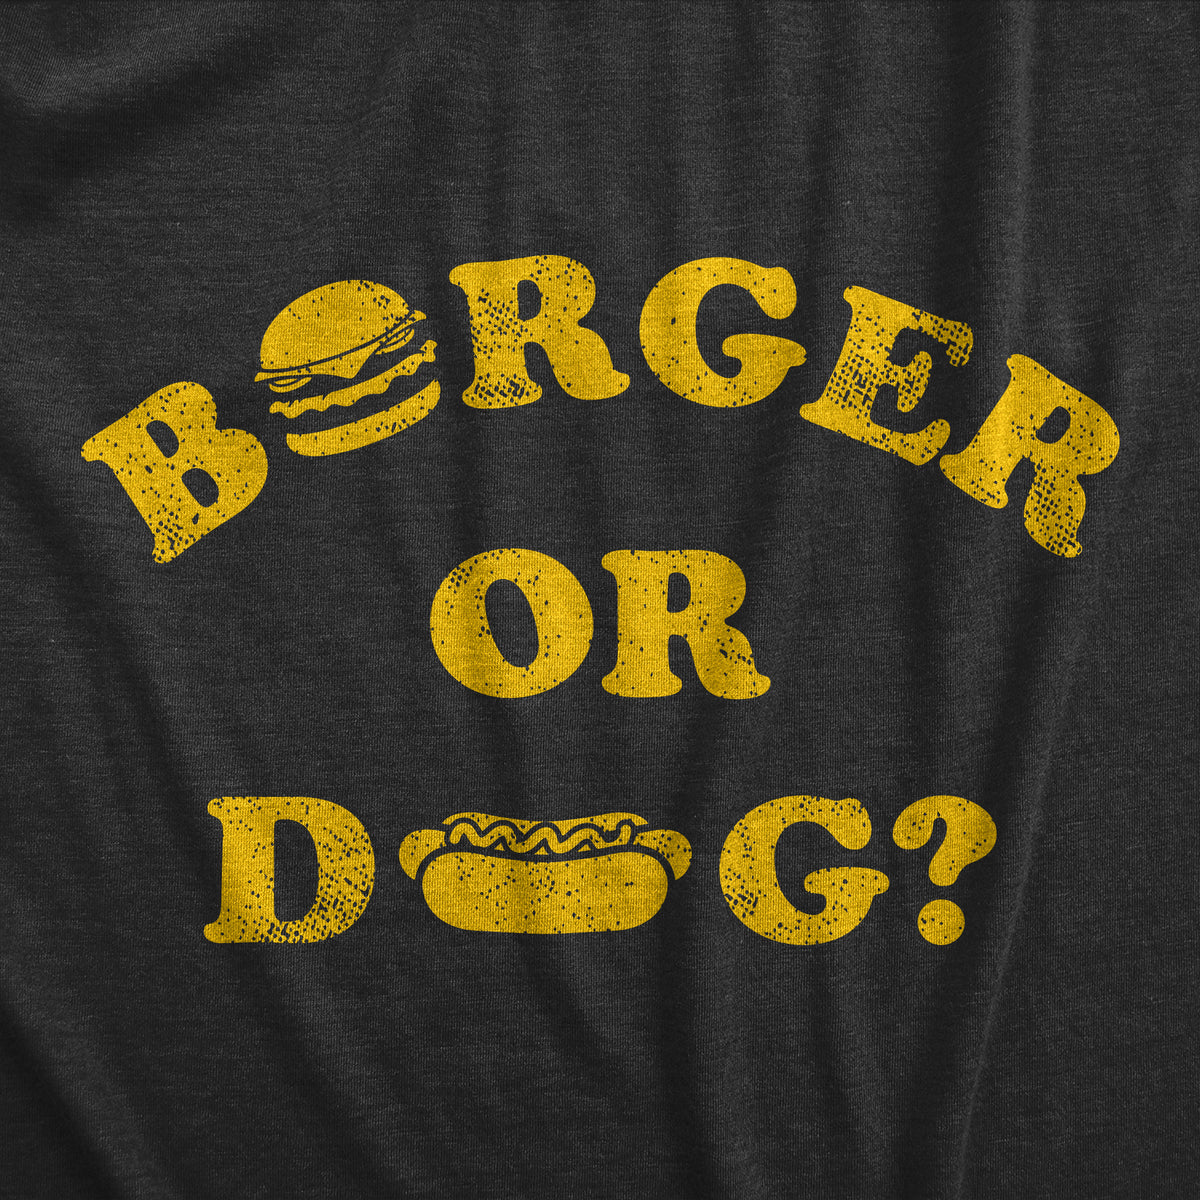 Burger Or Dog